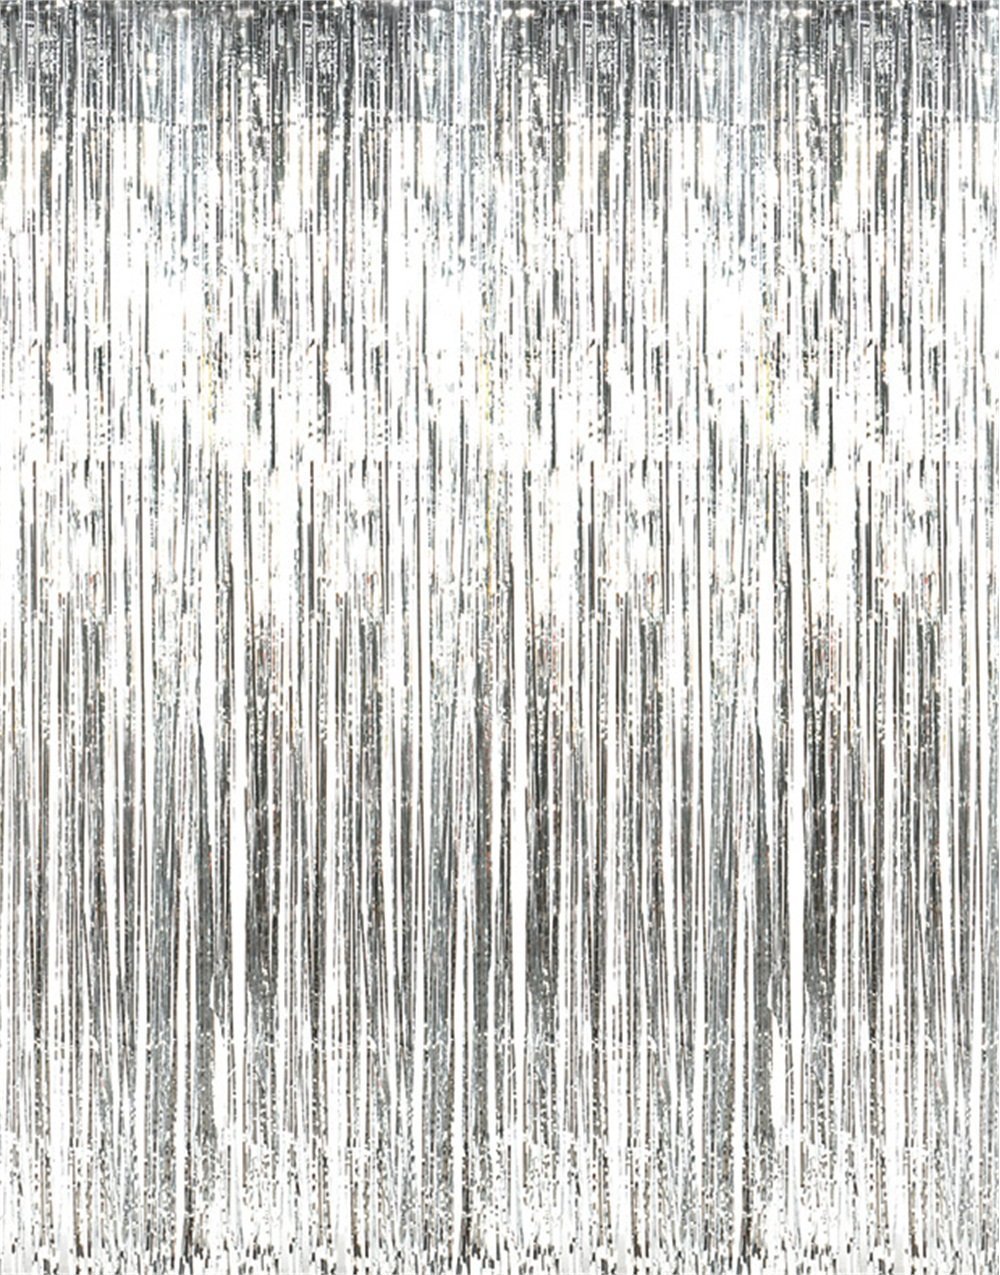 Metallic Silver Foil Fringe Curtains